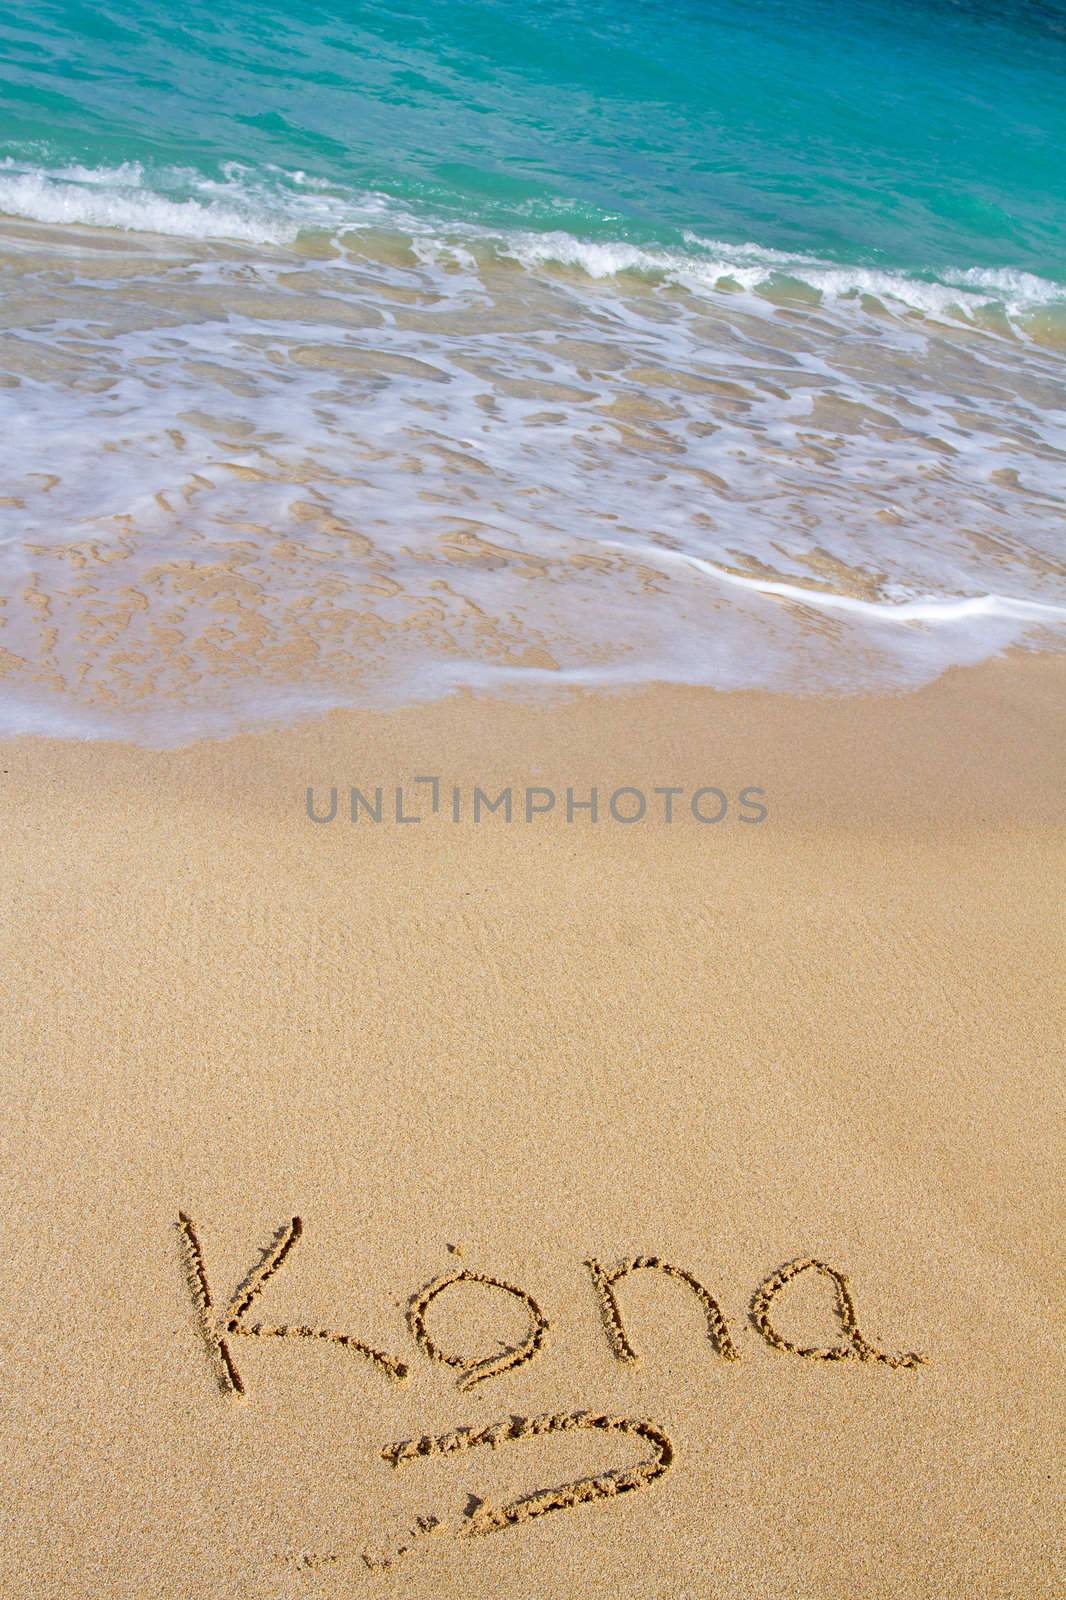 Kona Sand and Water by joshuaraineyphotography